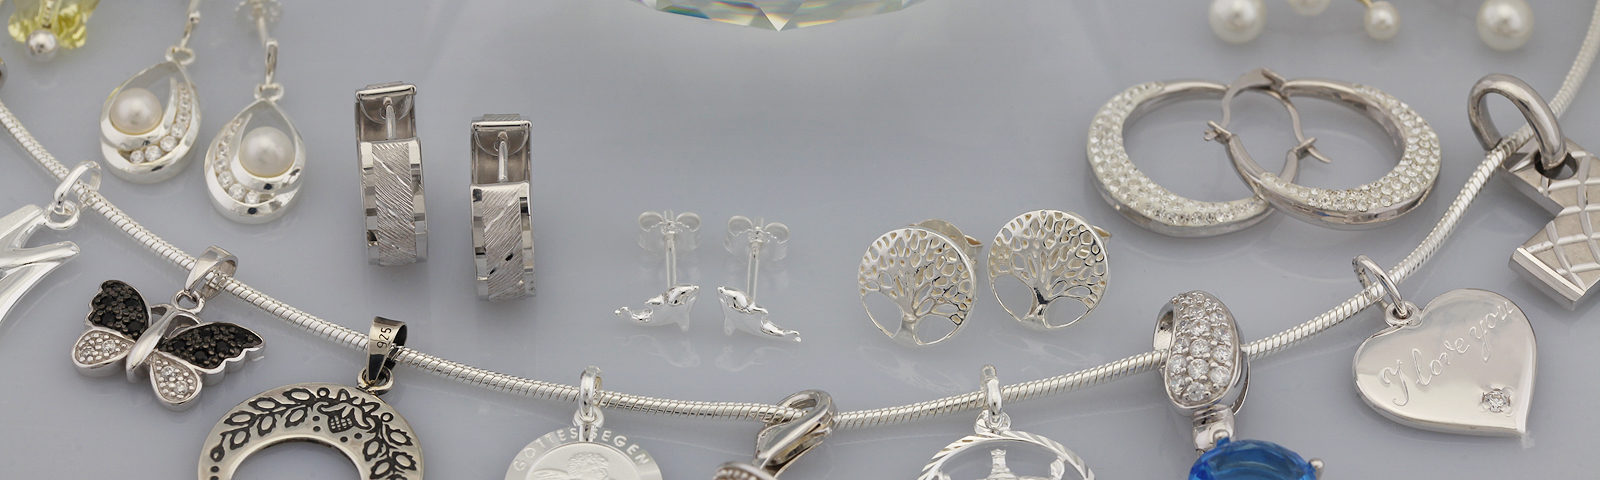 Various silver jewelry - pendants - earrings